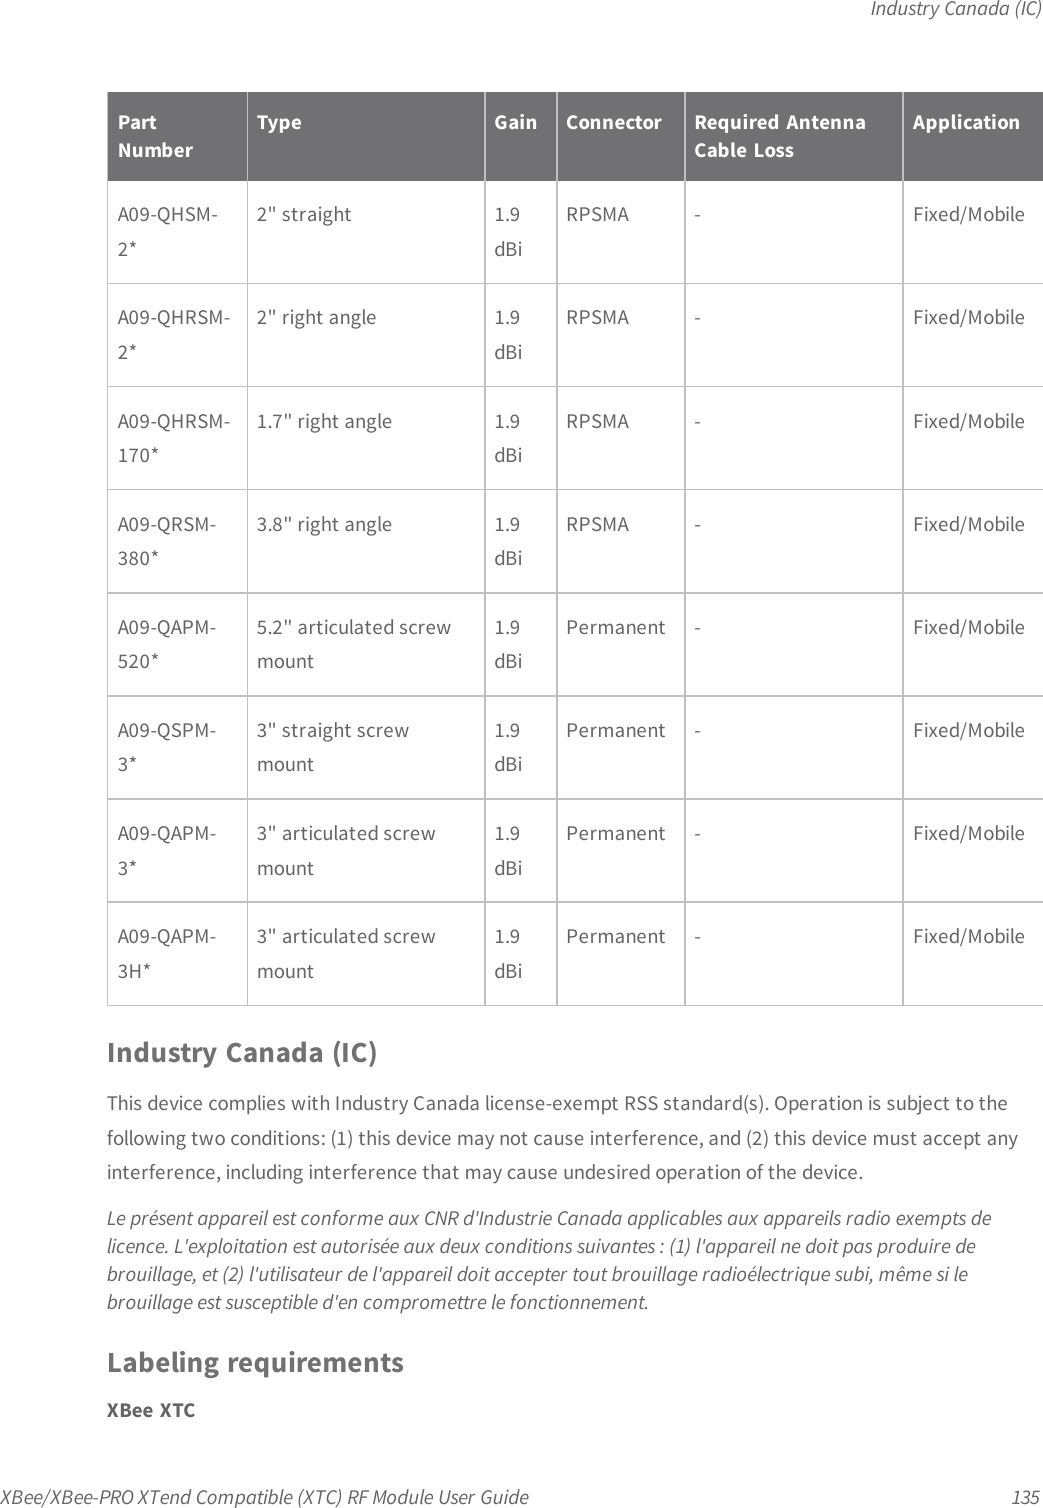 Industry Canada (IC)XBee/XBee-PRO XTend Compatible (XTC) RF Module User Guide 135PartNumberType Gain Connector Required AntennaCable LossApplicationA09-QHSM-2*2&quot; straight 1.9dBiRPSMA - Fixed/MobileA09-QHRSM-2*2&quot;  right angle 1.9dBiRPSMA - Fixed/MobileA09-QHRSM-170*1.7&quot;  right angle 1.9dBiRPSMA - Fixed/MobileA09-QRSM-380*3.8&quot;  right angle 1.9dBiRPSMA - Fixed/MobileA09-QAPM-520*5.2&quot;  articulated screwmount1.9dBiPermanent - Fixed/MobileA09-QSPM-3*3&quot;  straight screwmount1.9dBiPermanent - Fixed/MobileA09-QAPM-3*3&quot; articulated screwmount1.9dBiPermanent - Fixed/MobileA09-QAPM-3H*3&quot;  articulated screwmount1.9dBiPermanent - Fixed/MobileIndustry Canada (IC)This device complies with Industry Canada license-exempt RSS standard(s). Operation is subject to thefollowing two conditions: (1) this device may not cause interference, and (2) this device must accept anyinterference, including interference that may cause undesired operation of the device.Le présent appareil est conforme aux CNR d&apos;Industrie Canada applicables aux appareils radio exempts delicence. L&apos;exploitation est autorisée aux deux conditions suivantes : (1) l&apos;appareil ne doit pas produire debrouillage, et (2) l&apos;utilisateur de l&apos;appareil doit accepter tout brouillage radioélectrique subi, même si lebrouillage est susceptible d&apos;en compromettre le fonctionnement.Labeling requirementsXBee XTC